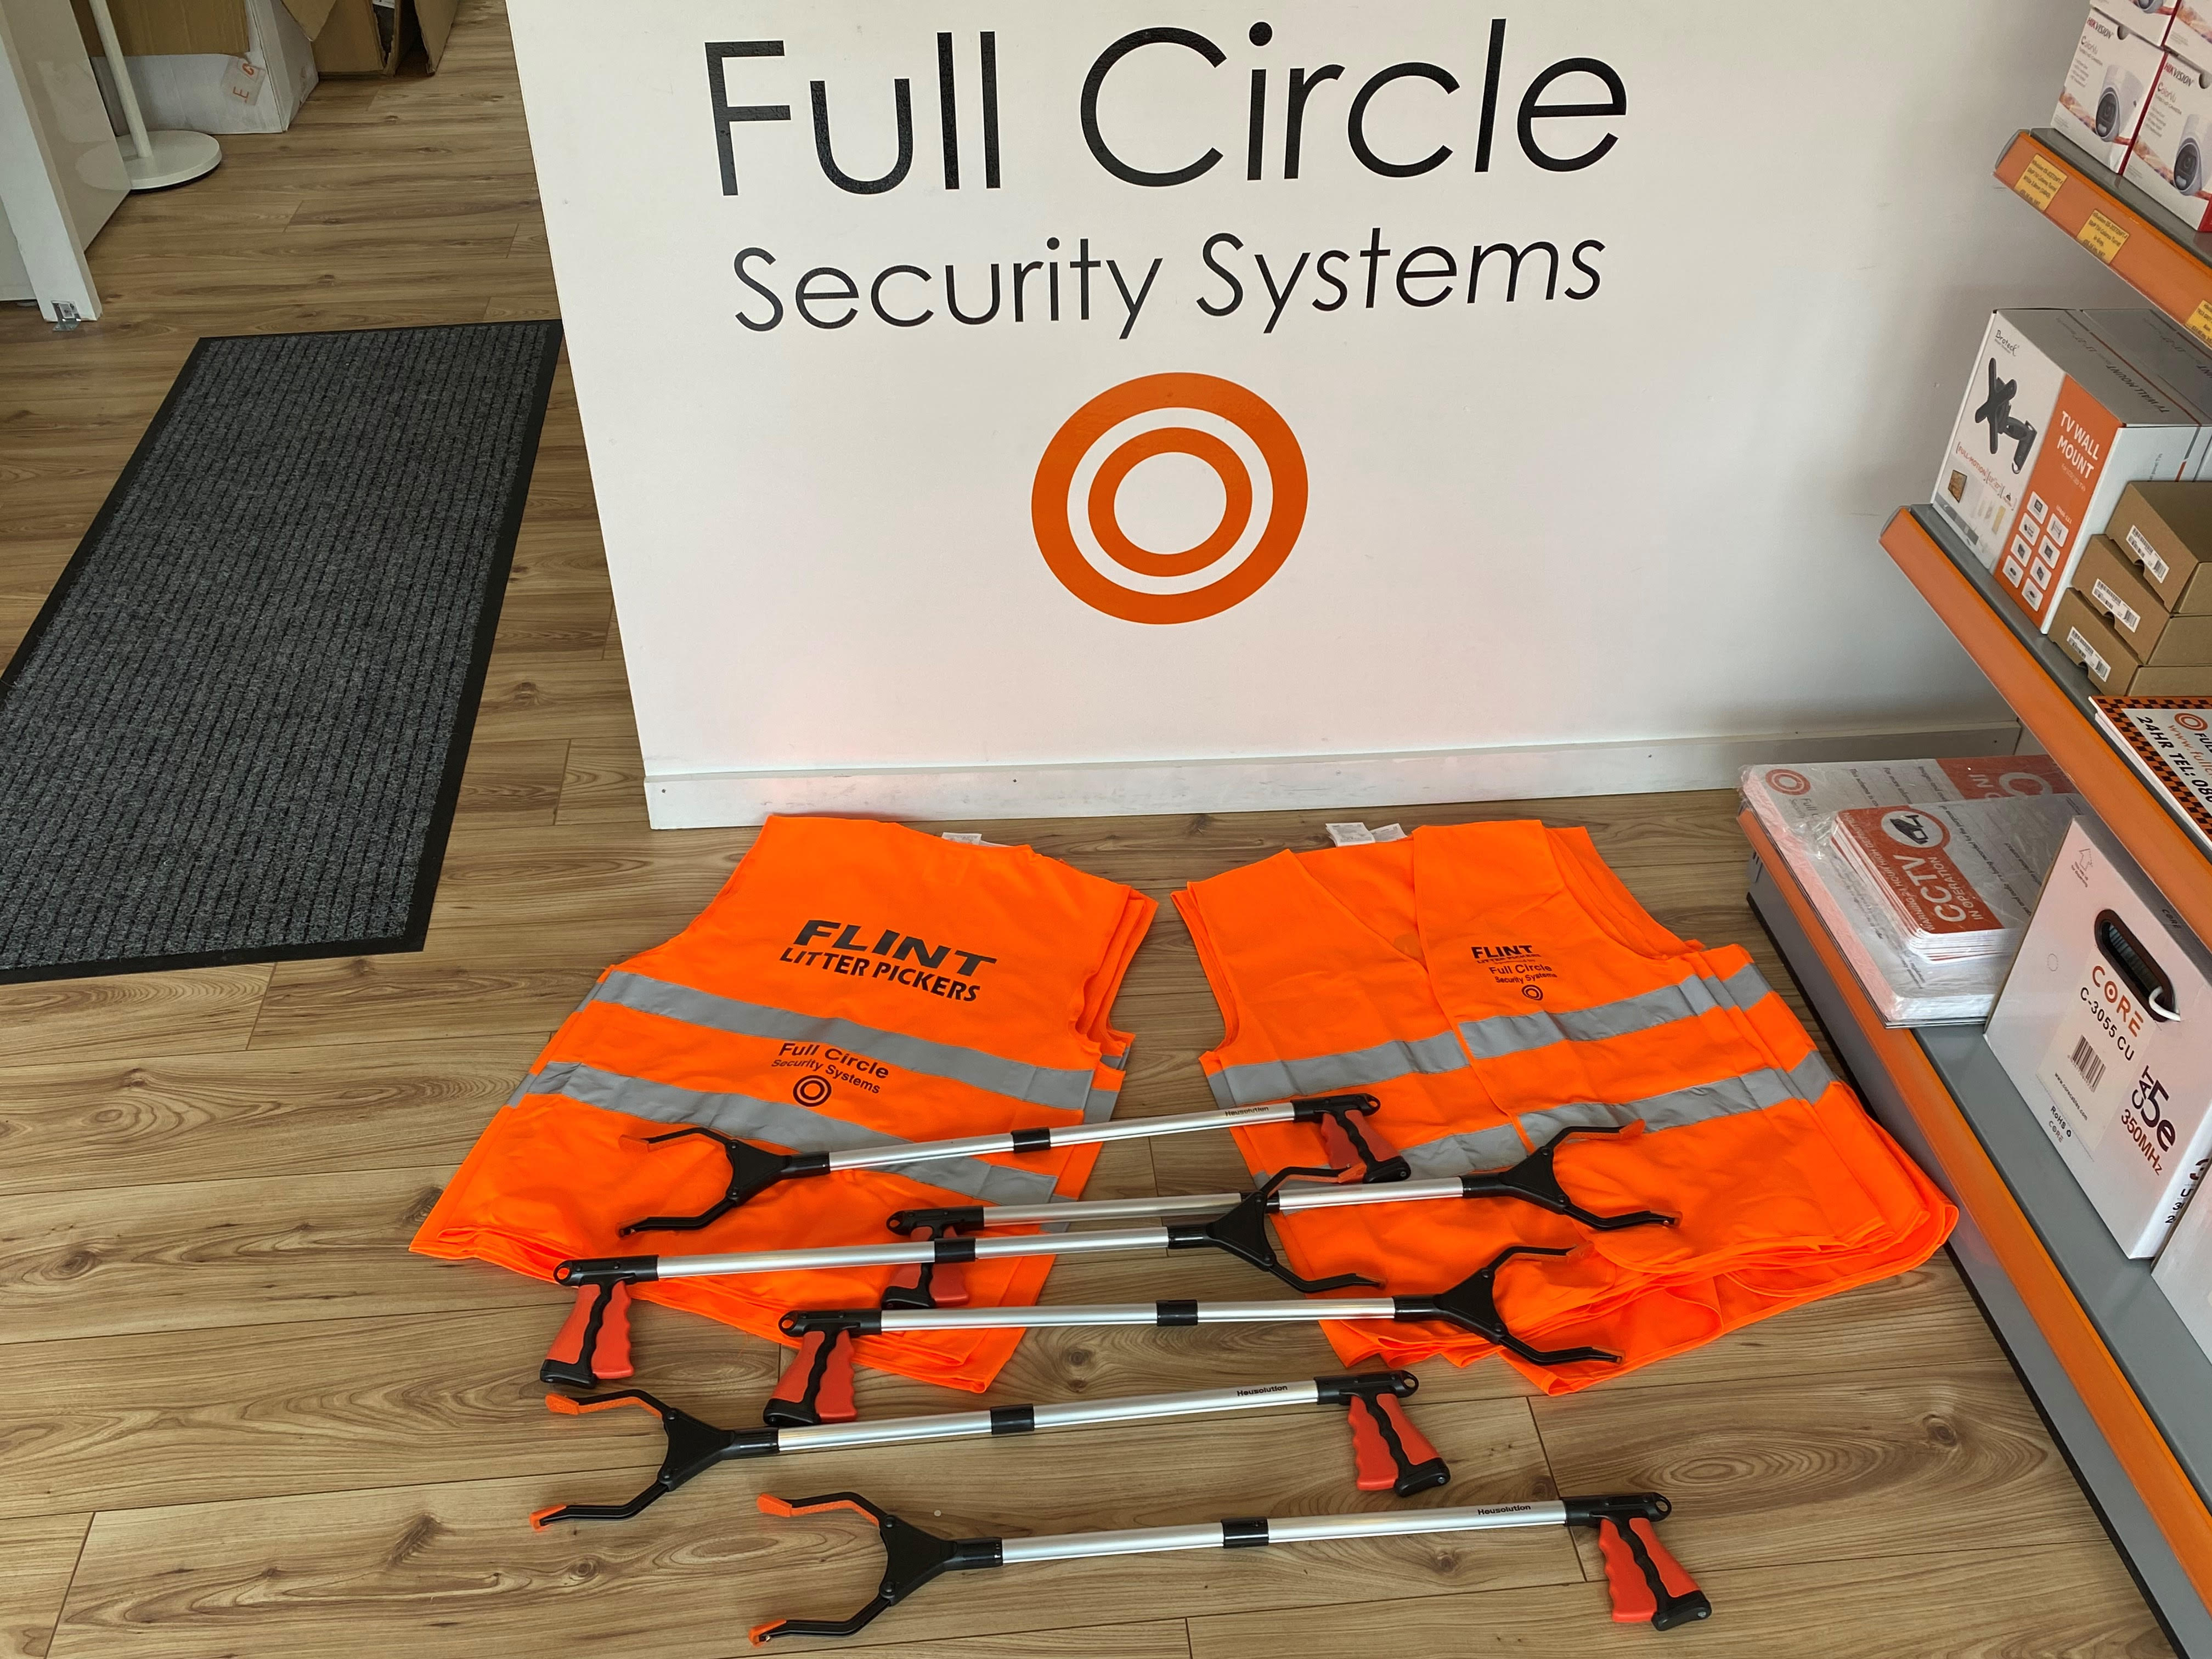 Full Circle Security Systems sponsor volunteer group Flint Litter Pickers